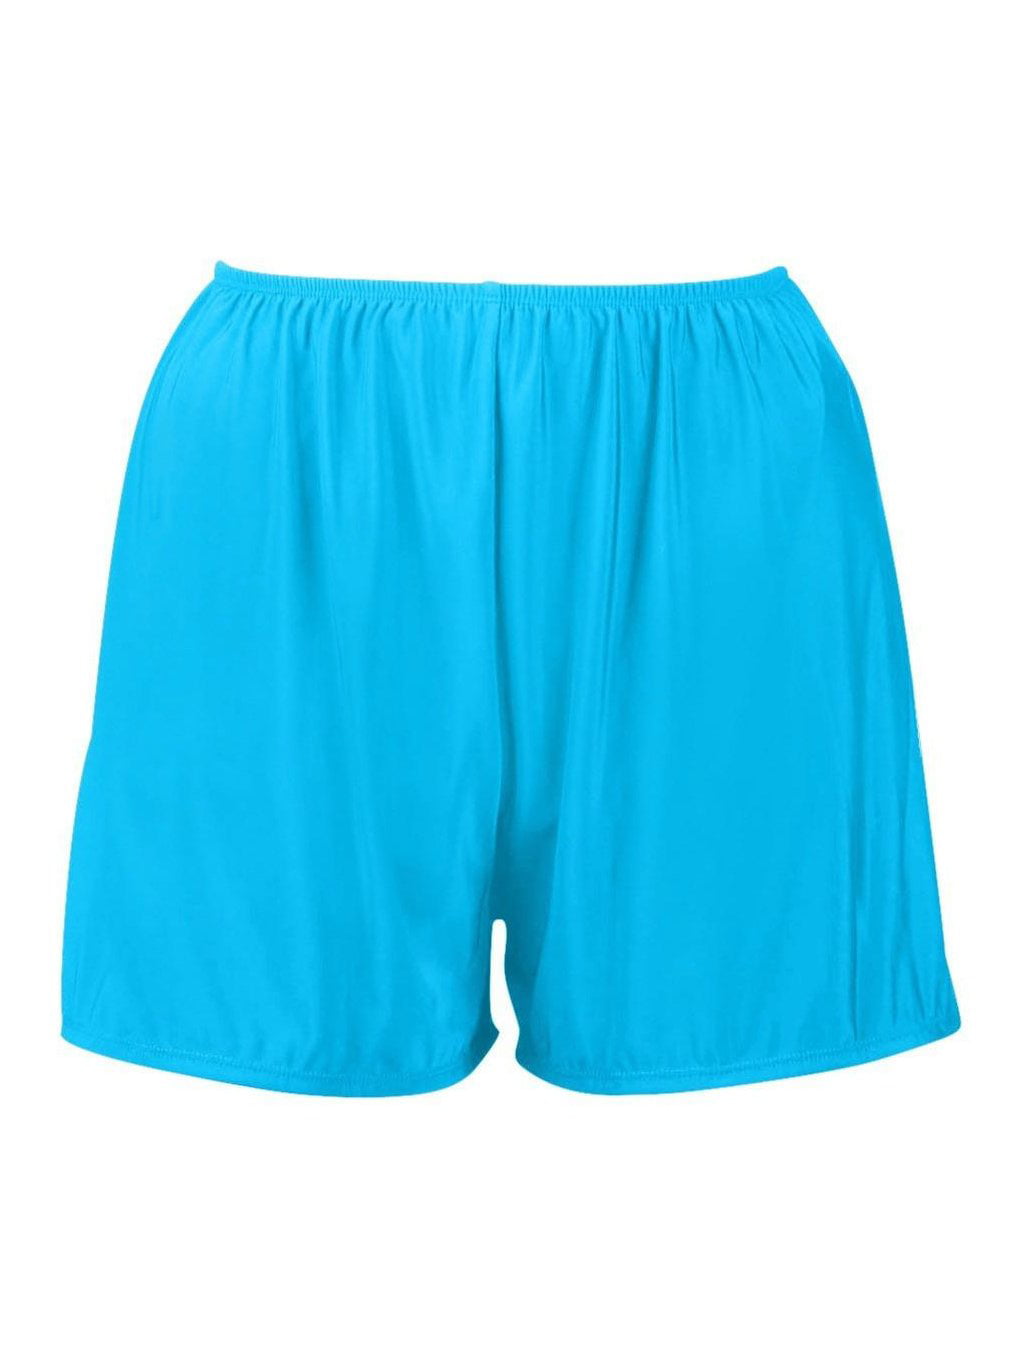 Topanga - Women's Plus-Size Swim Shorts Full Coverage Swim Bottoms ...